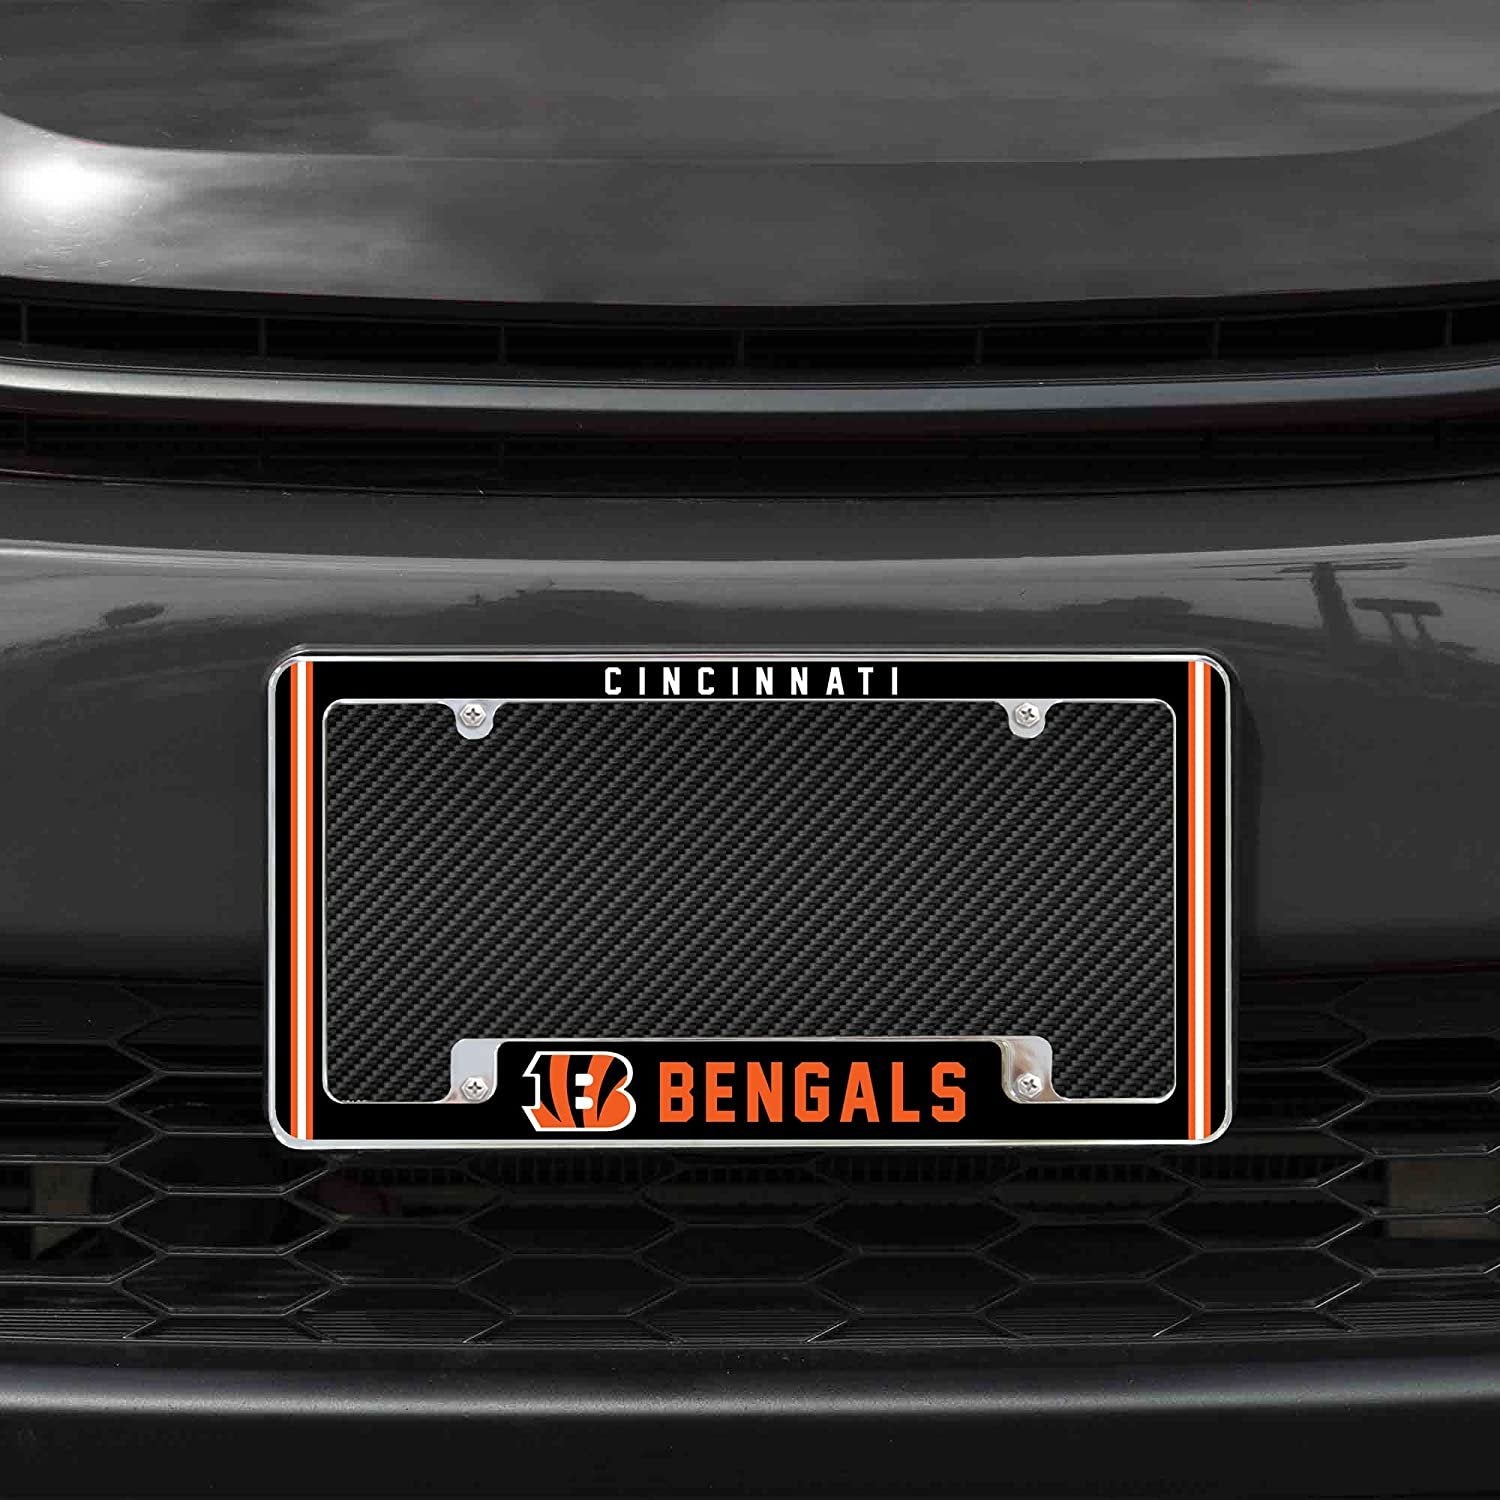 Cincinnati Bengals Metal License Plate Frame Chrome Tag Cover Alternate Design 6x12 Inch